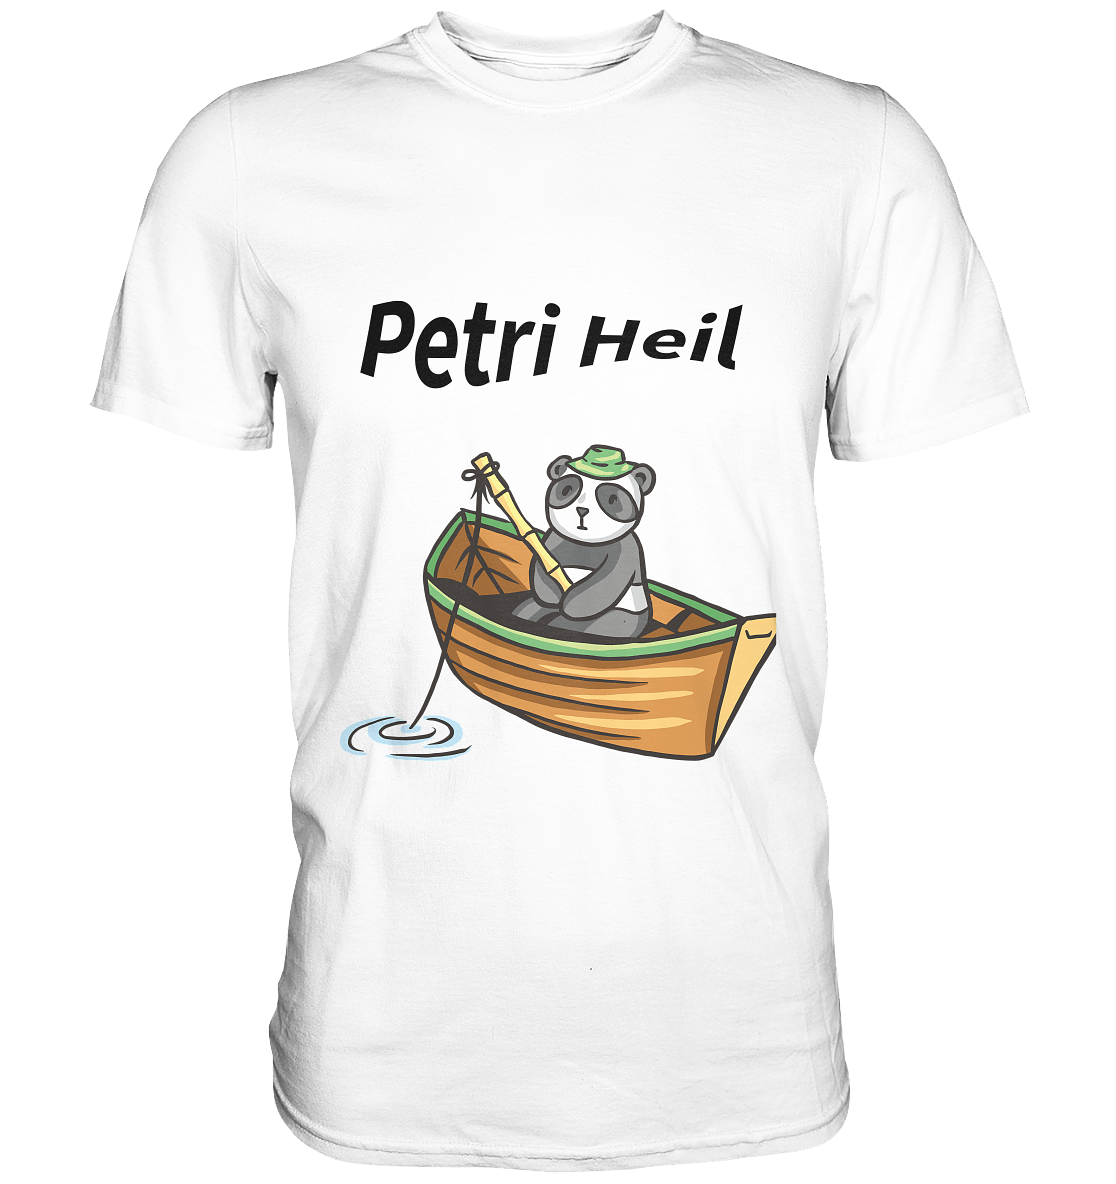 Petri-Heil-Bär - Classic Shirt - Online Kaufhaus München